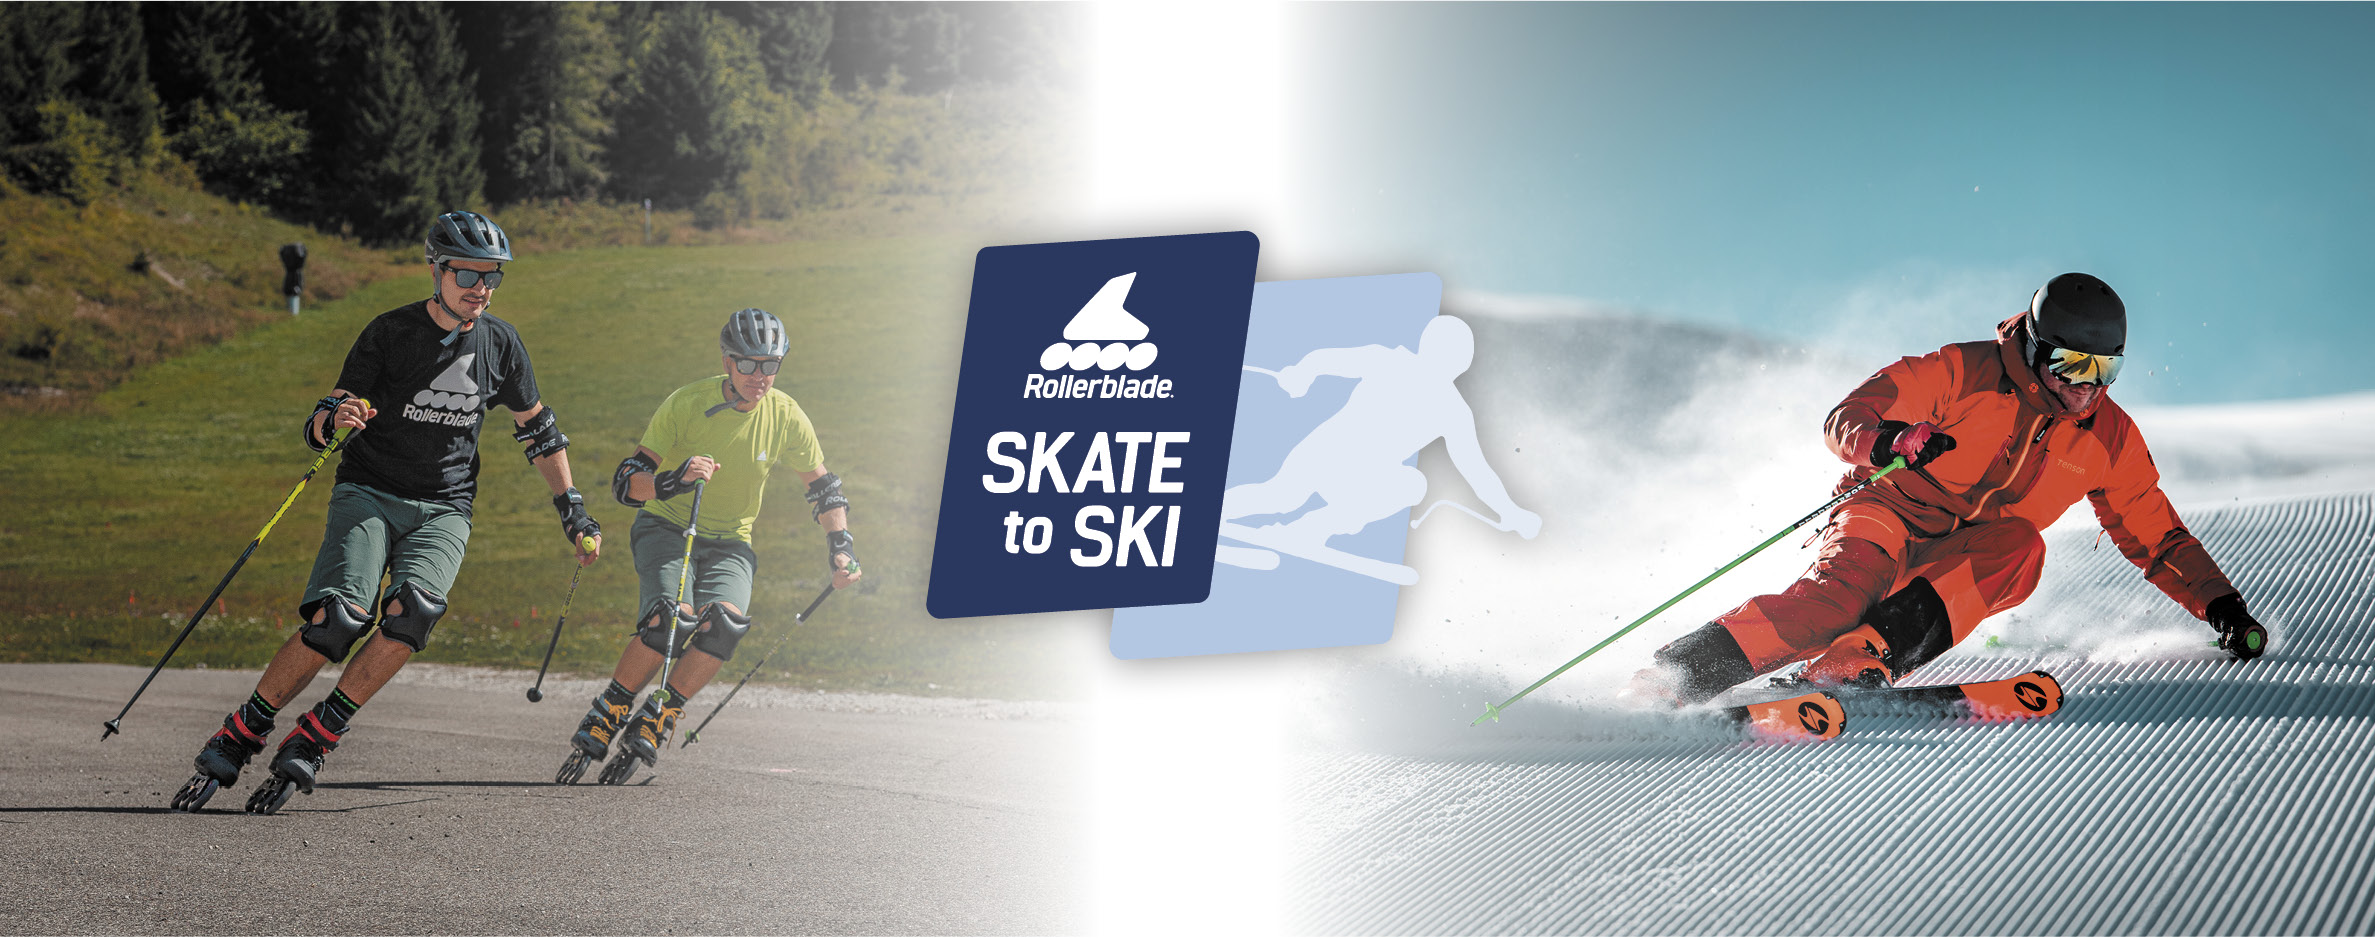 Ski and Skate